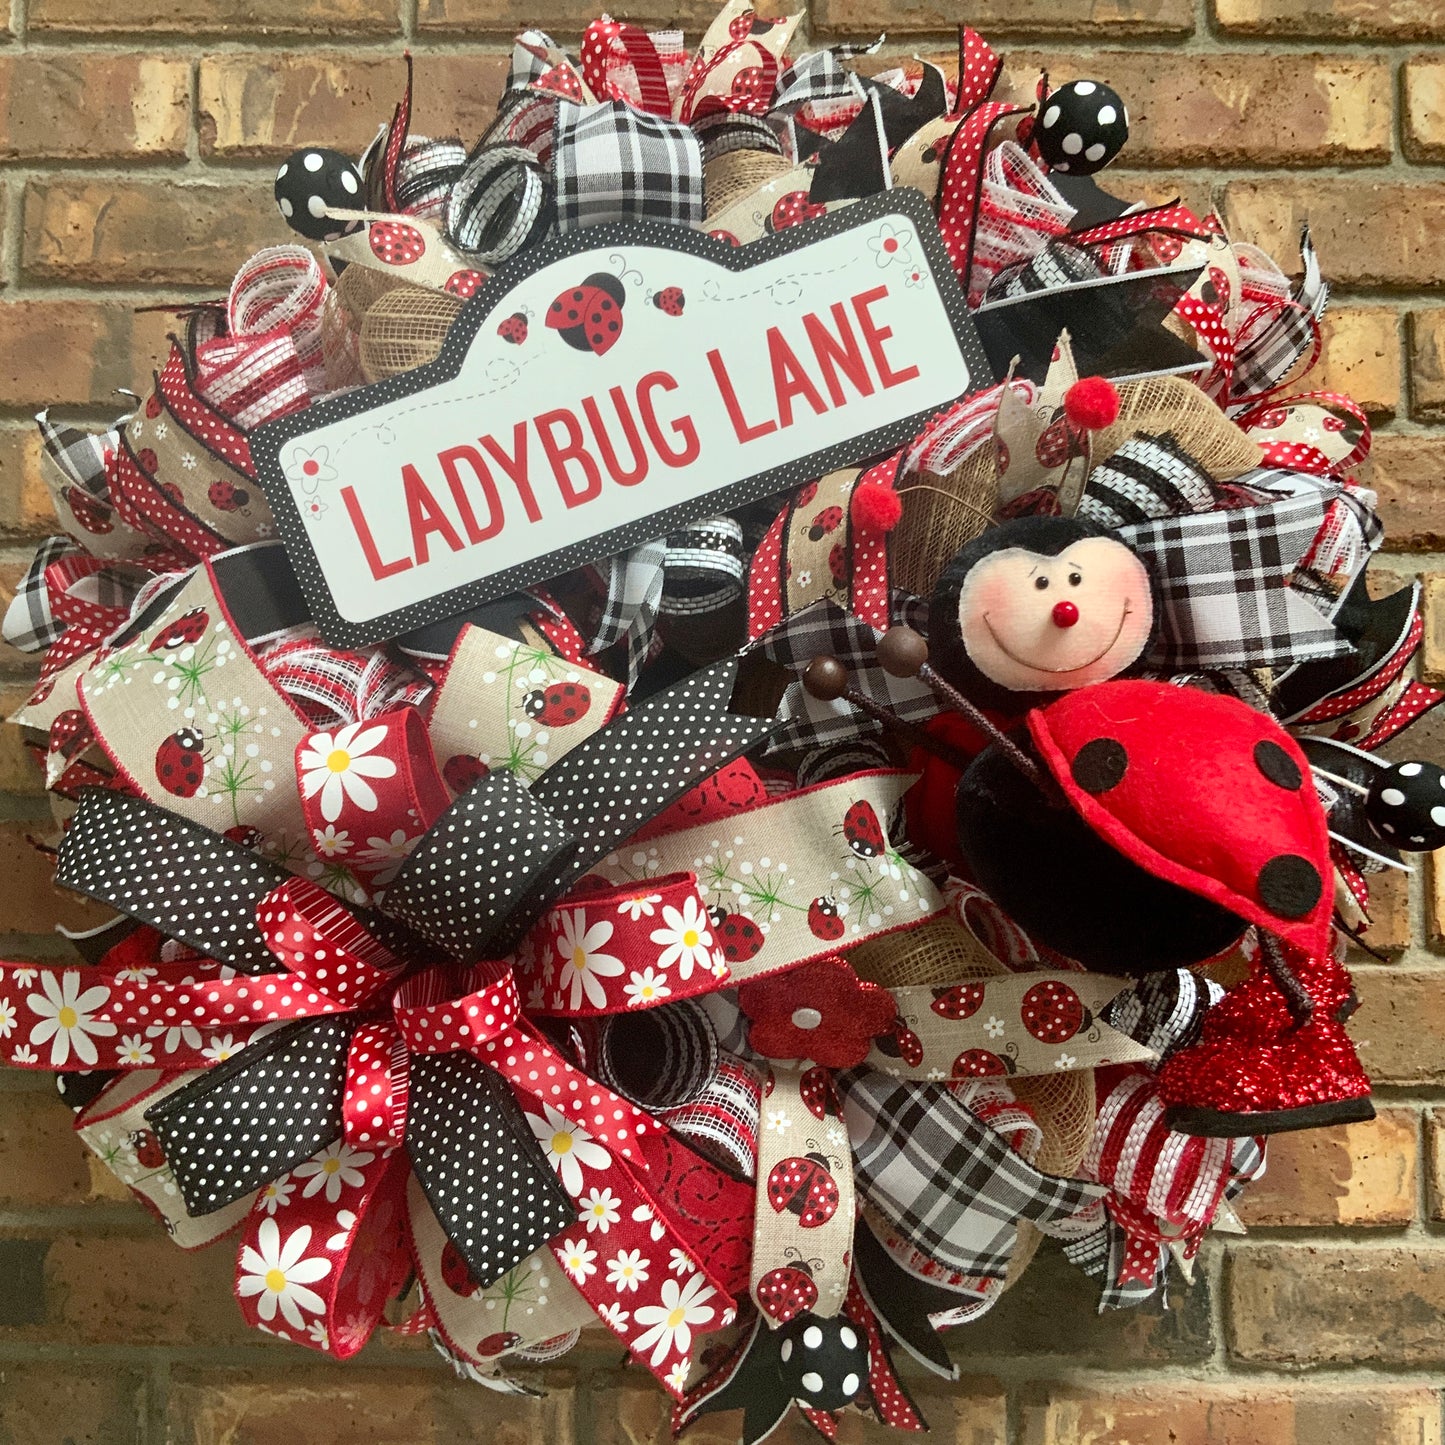 Lady Bug Wreath, LadyBug Lane Wreath For Front Door, Summer LadyBug Wreath, Lady Bug Decor, LadyBug Decor, Large Summer Wreath